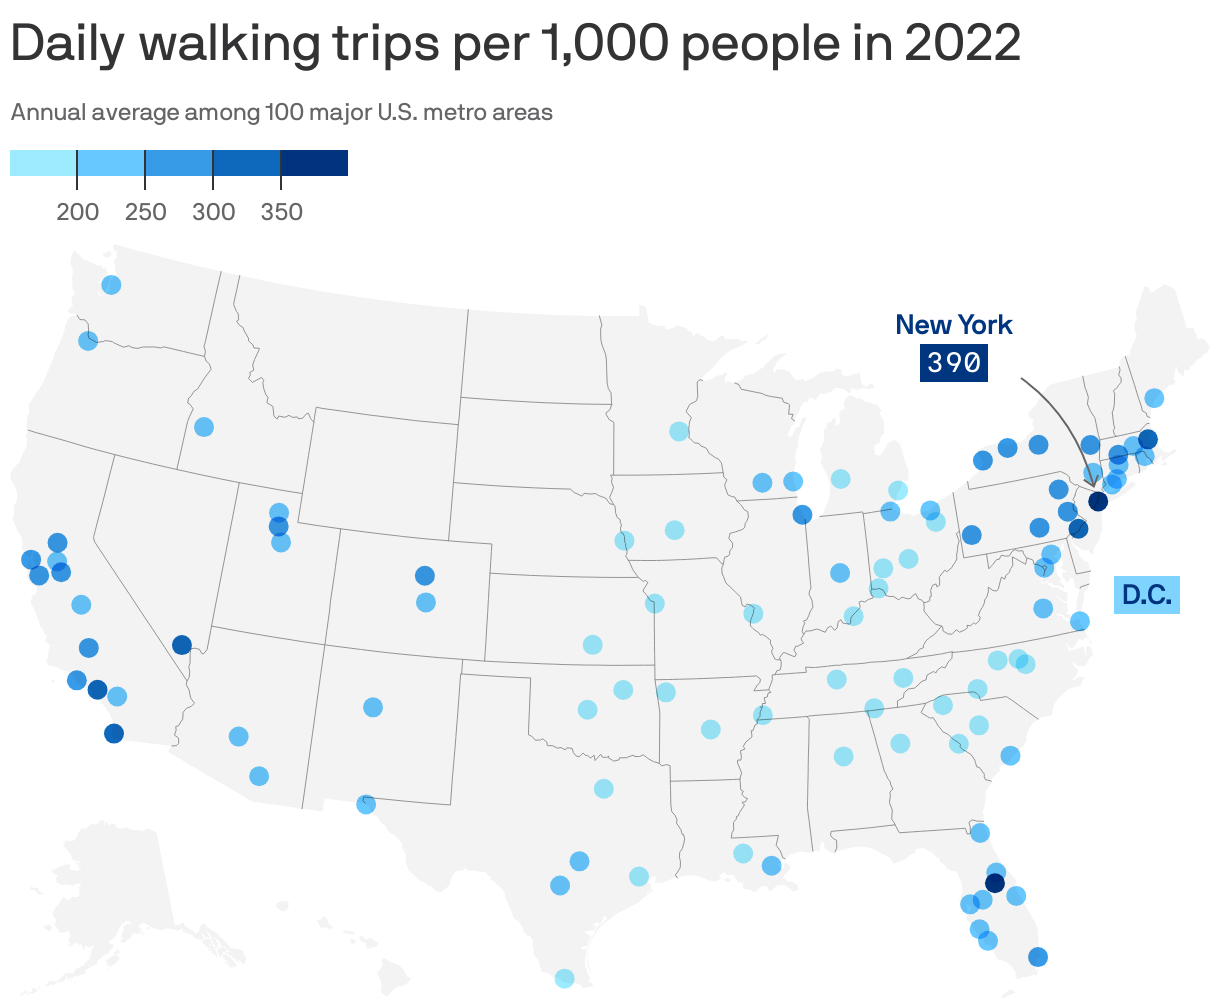 Daily walking trips per 1,000 people in 2022